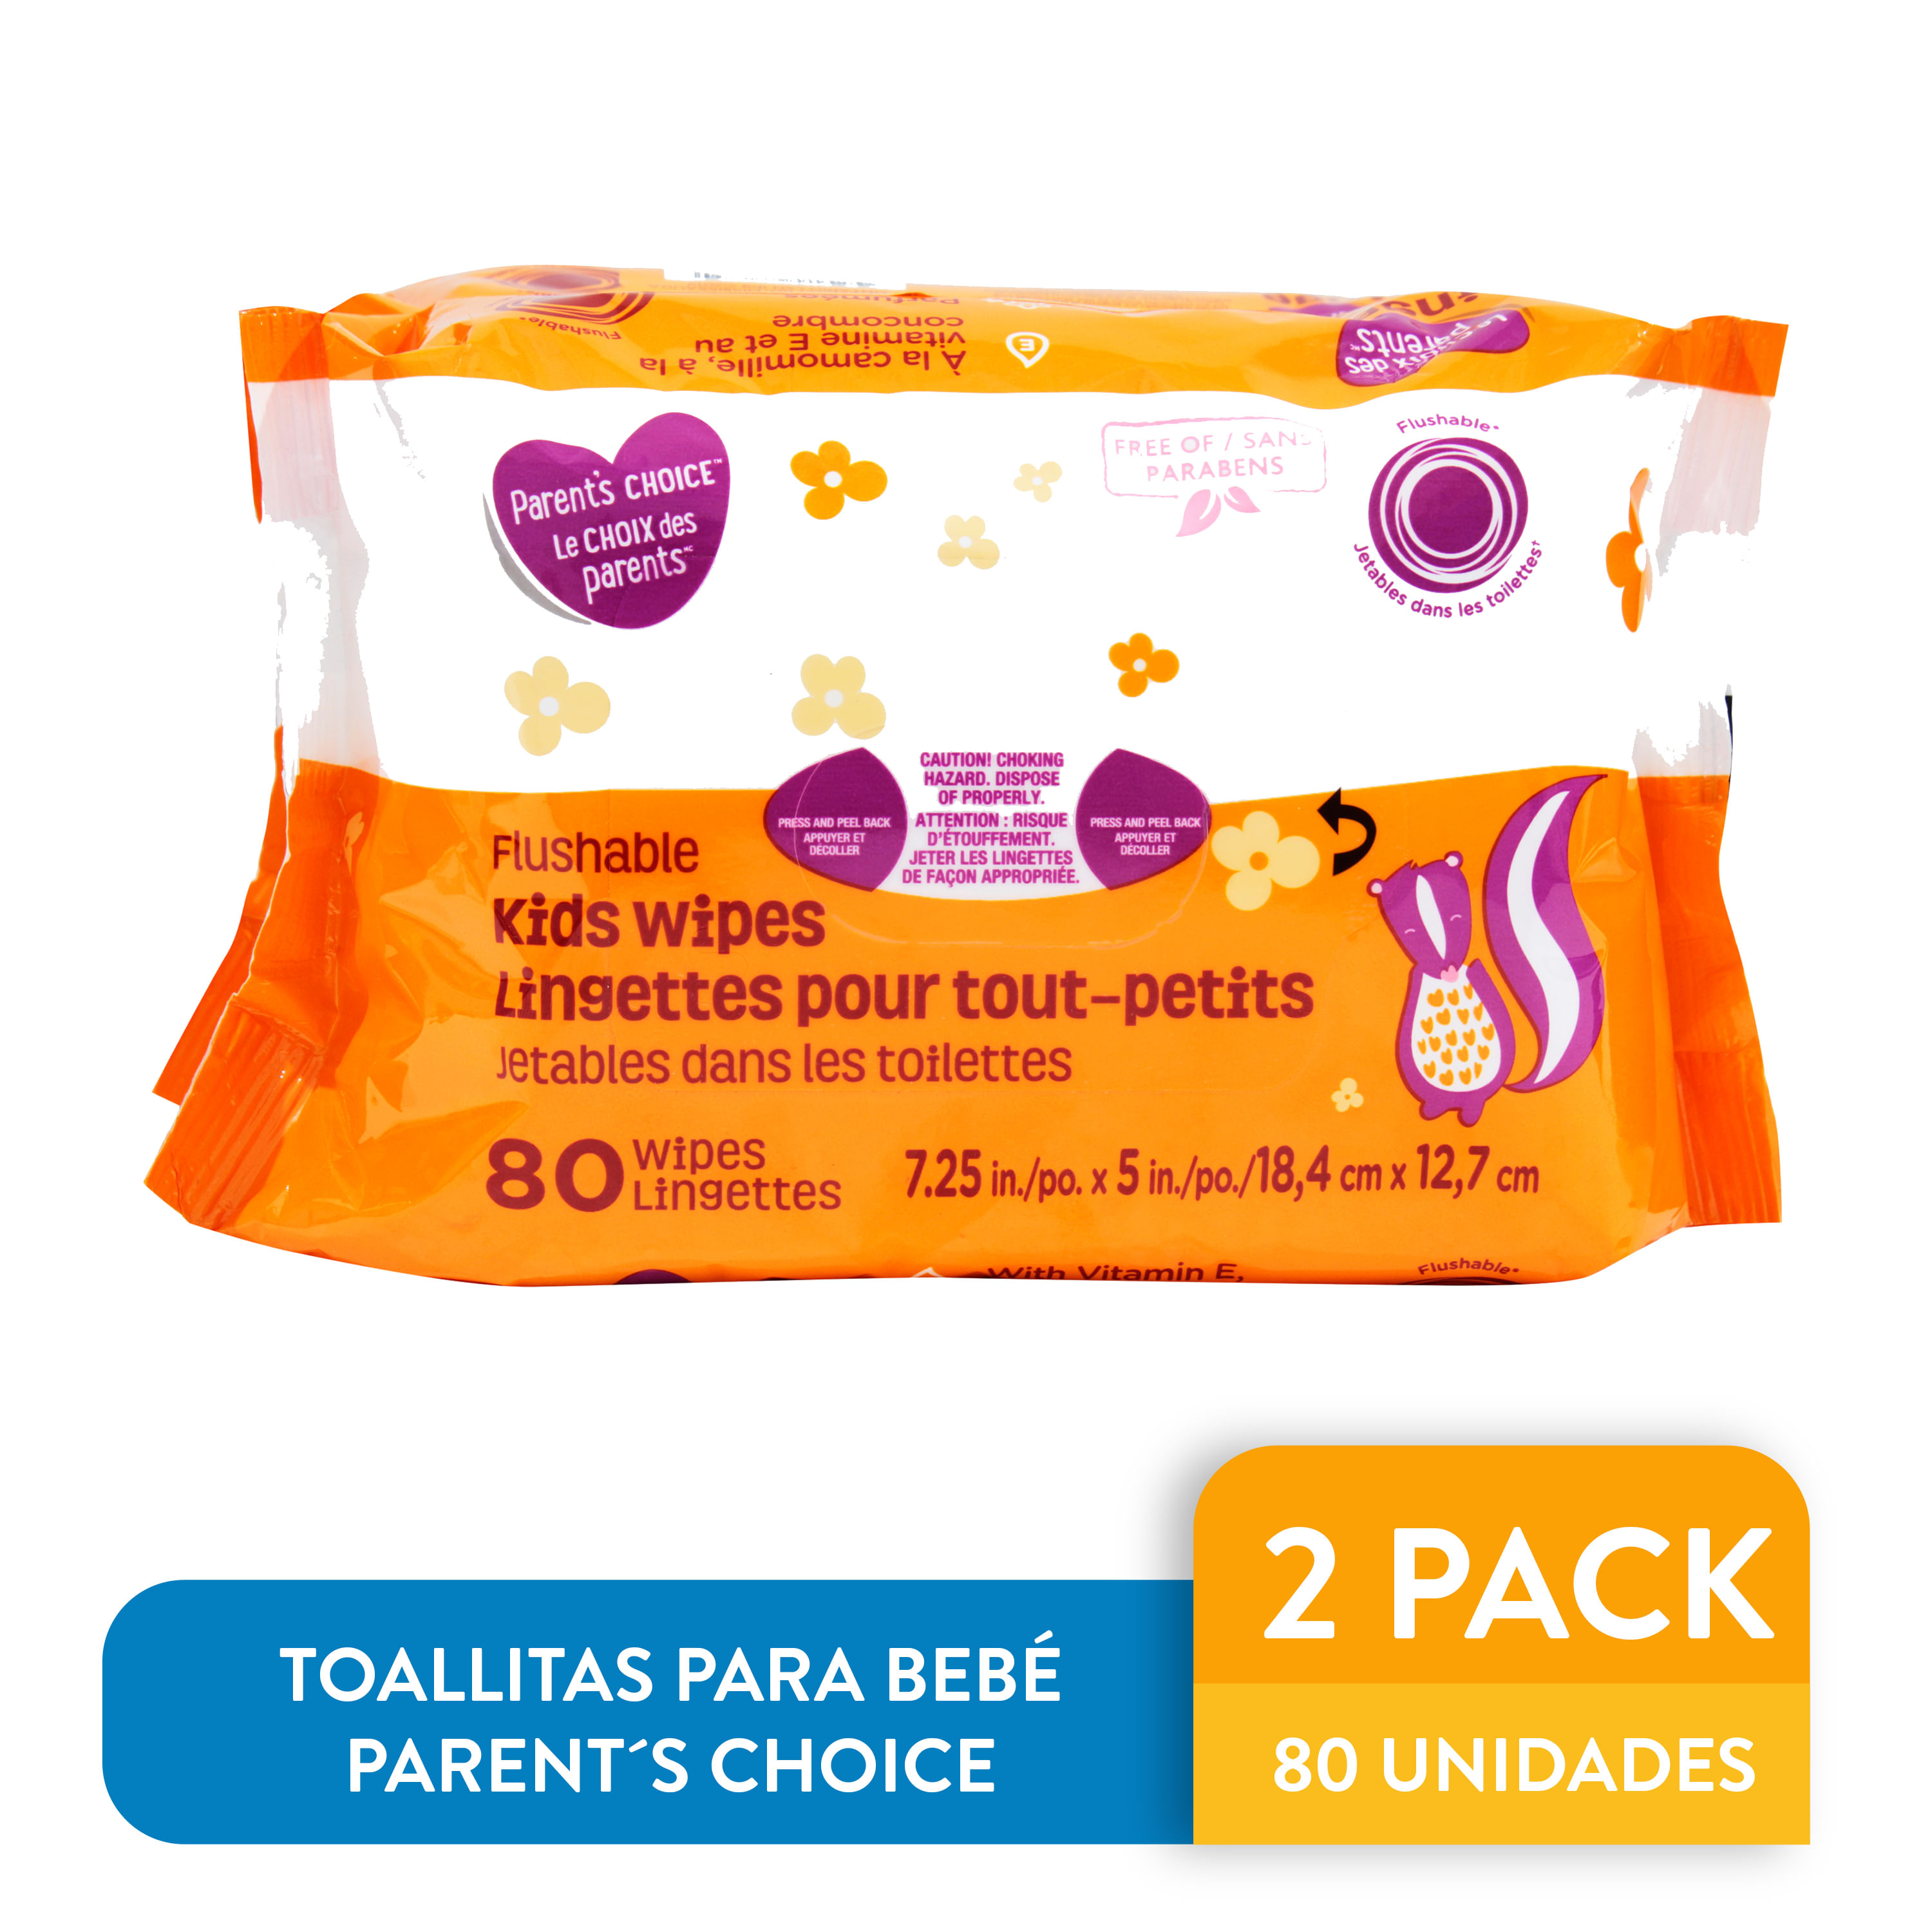 Sensitive toallitas húmedas infantiles wc pack 2 envases 60 unidades ·  KANDOO · Supermercado El Corte Inglés El Corte Inglés